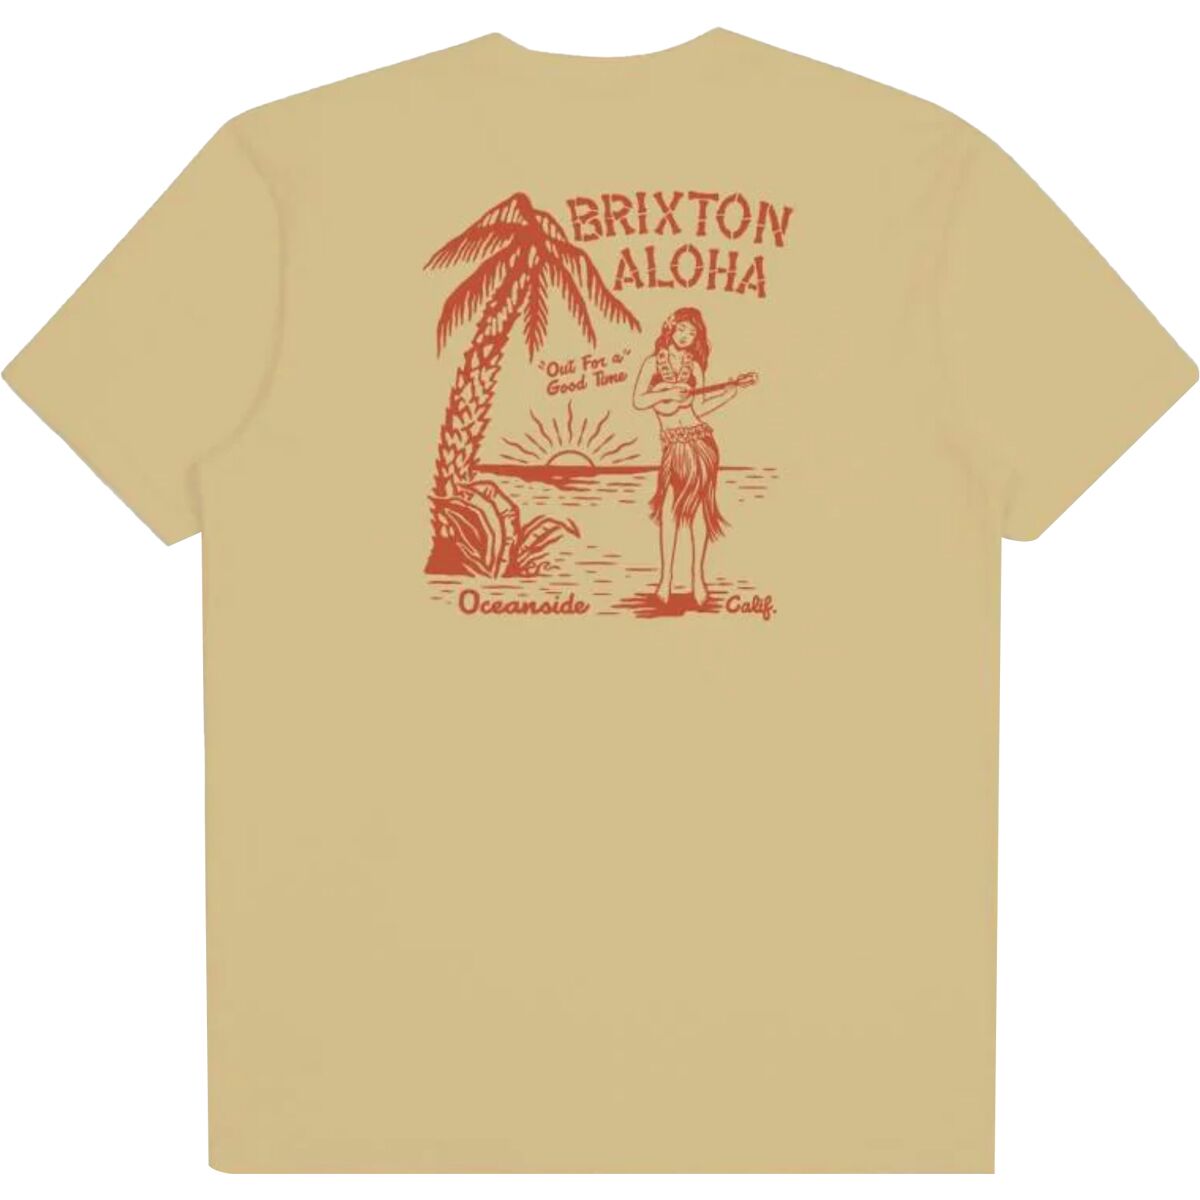 Brixton Good Time Short-Sleeve Tailored T-Shirt - Men's